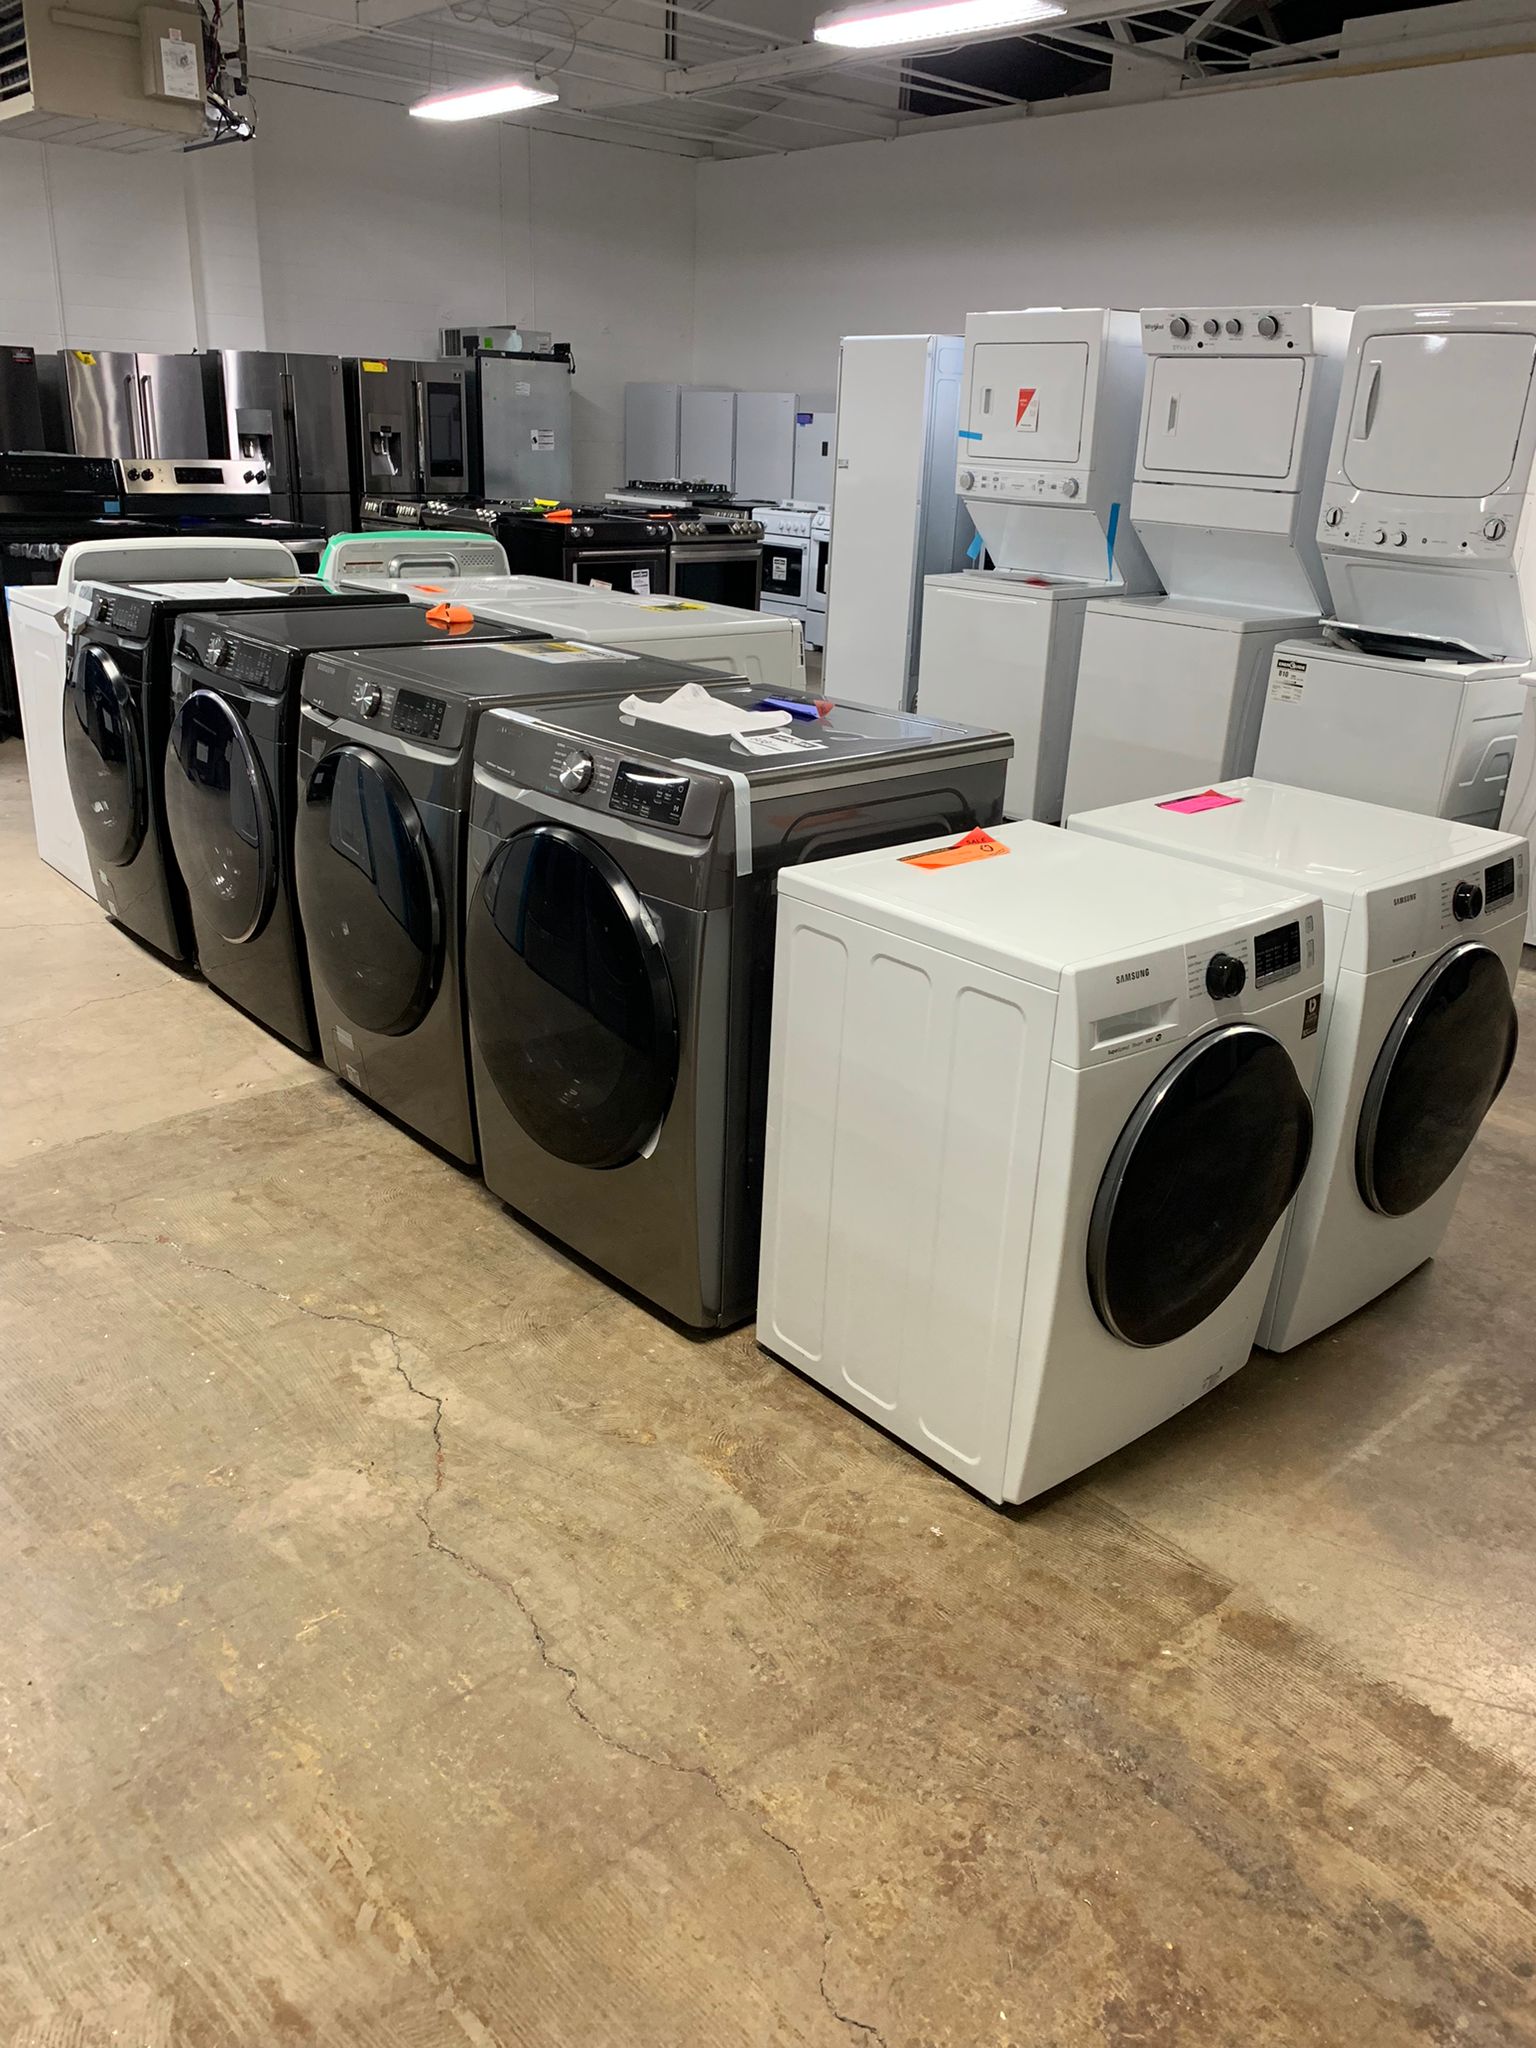 washing machine edmonton - appliance kingdom